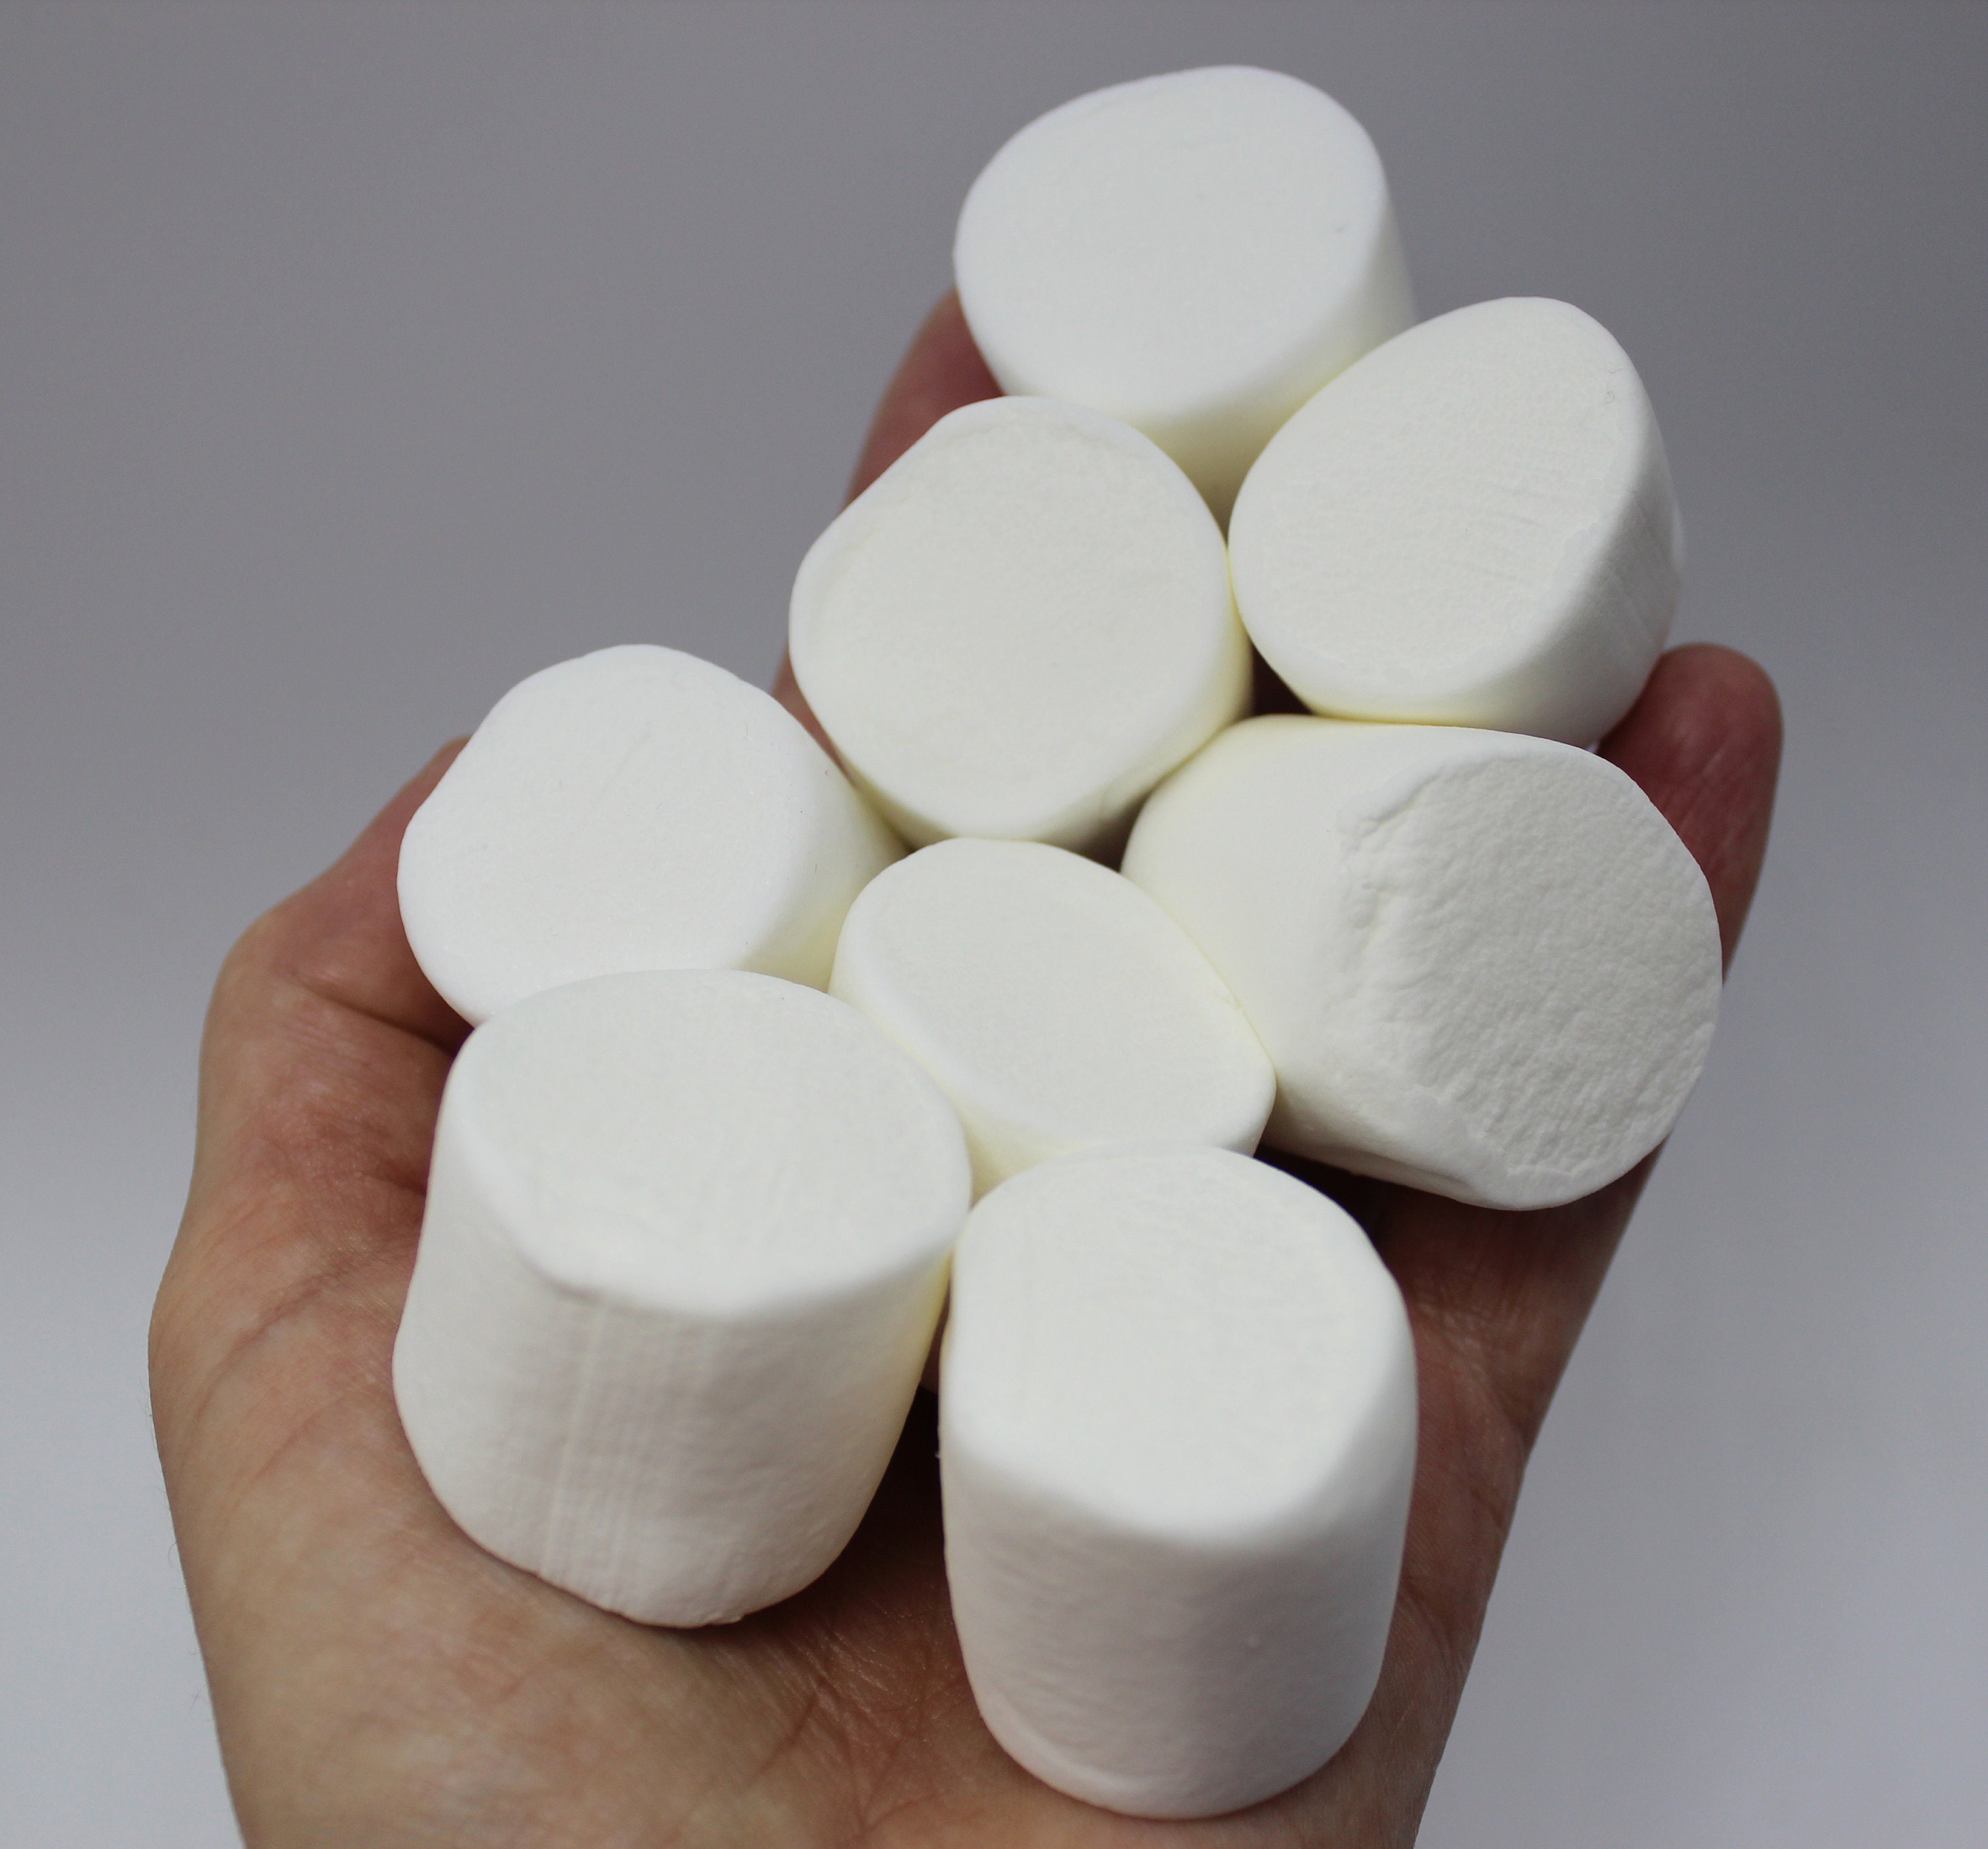 Marshmallow Mold Handmade White Chamallow Resin Stock Photo 1202271097